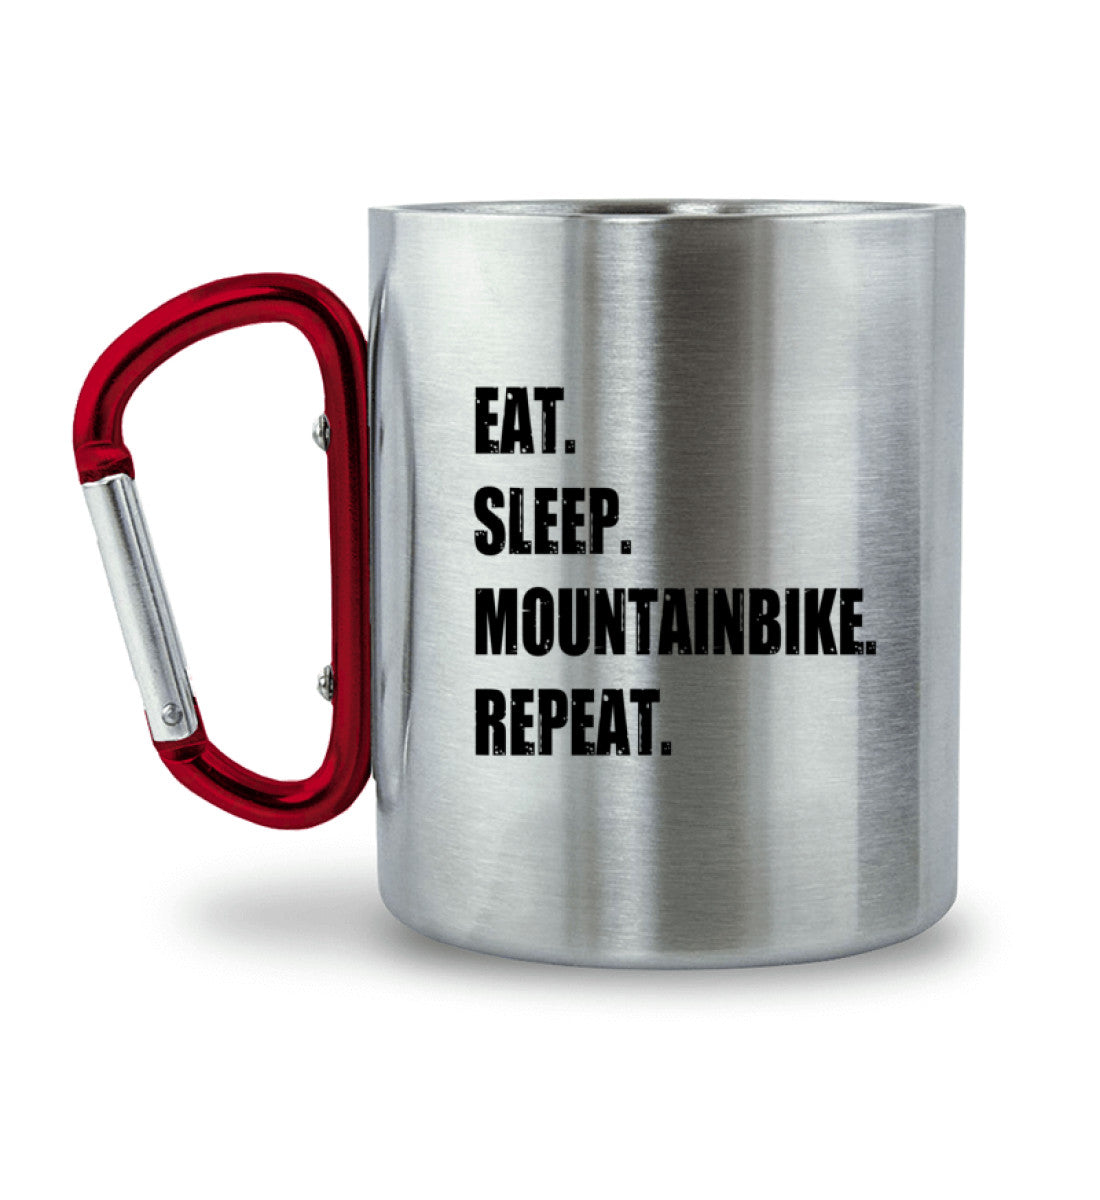 Eat Sleep Mountainbike Repeat - Karabiner Tasse mountainbike